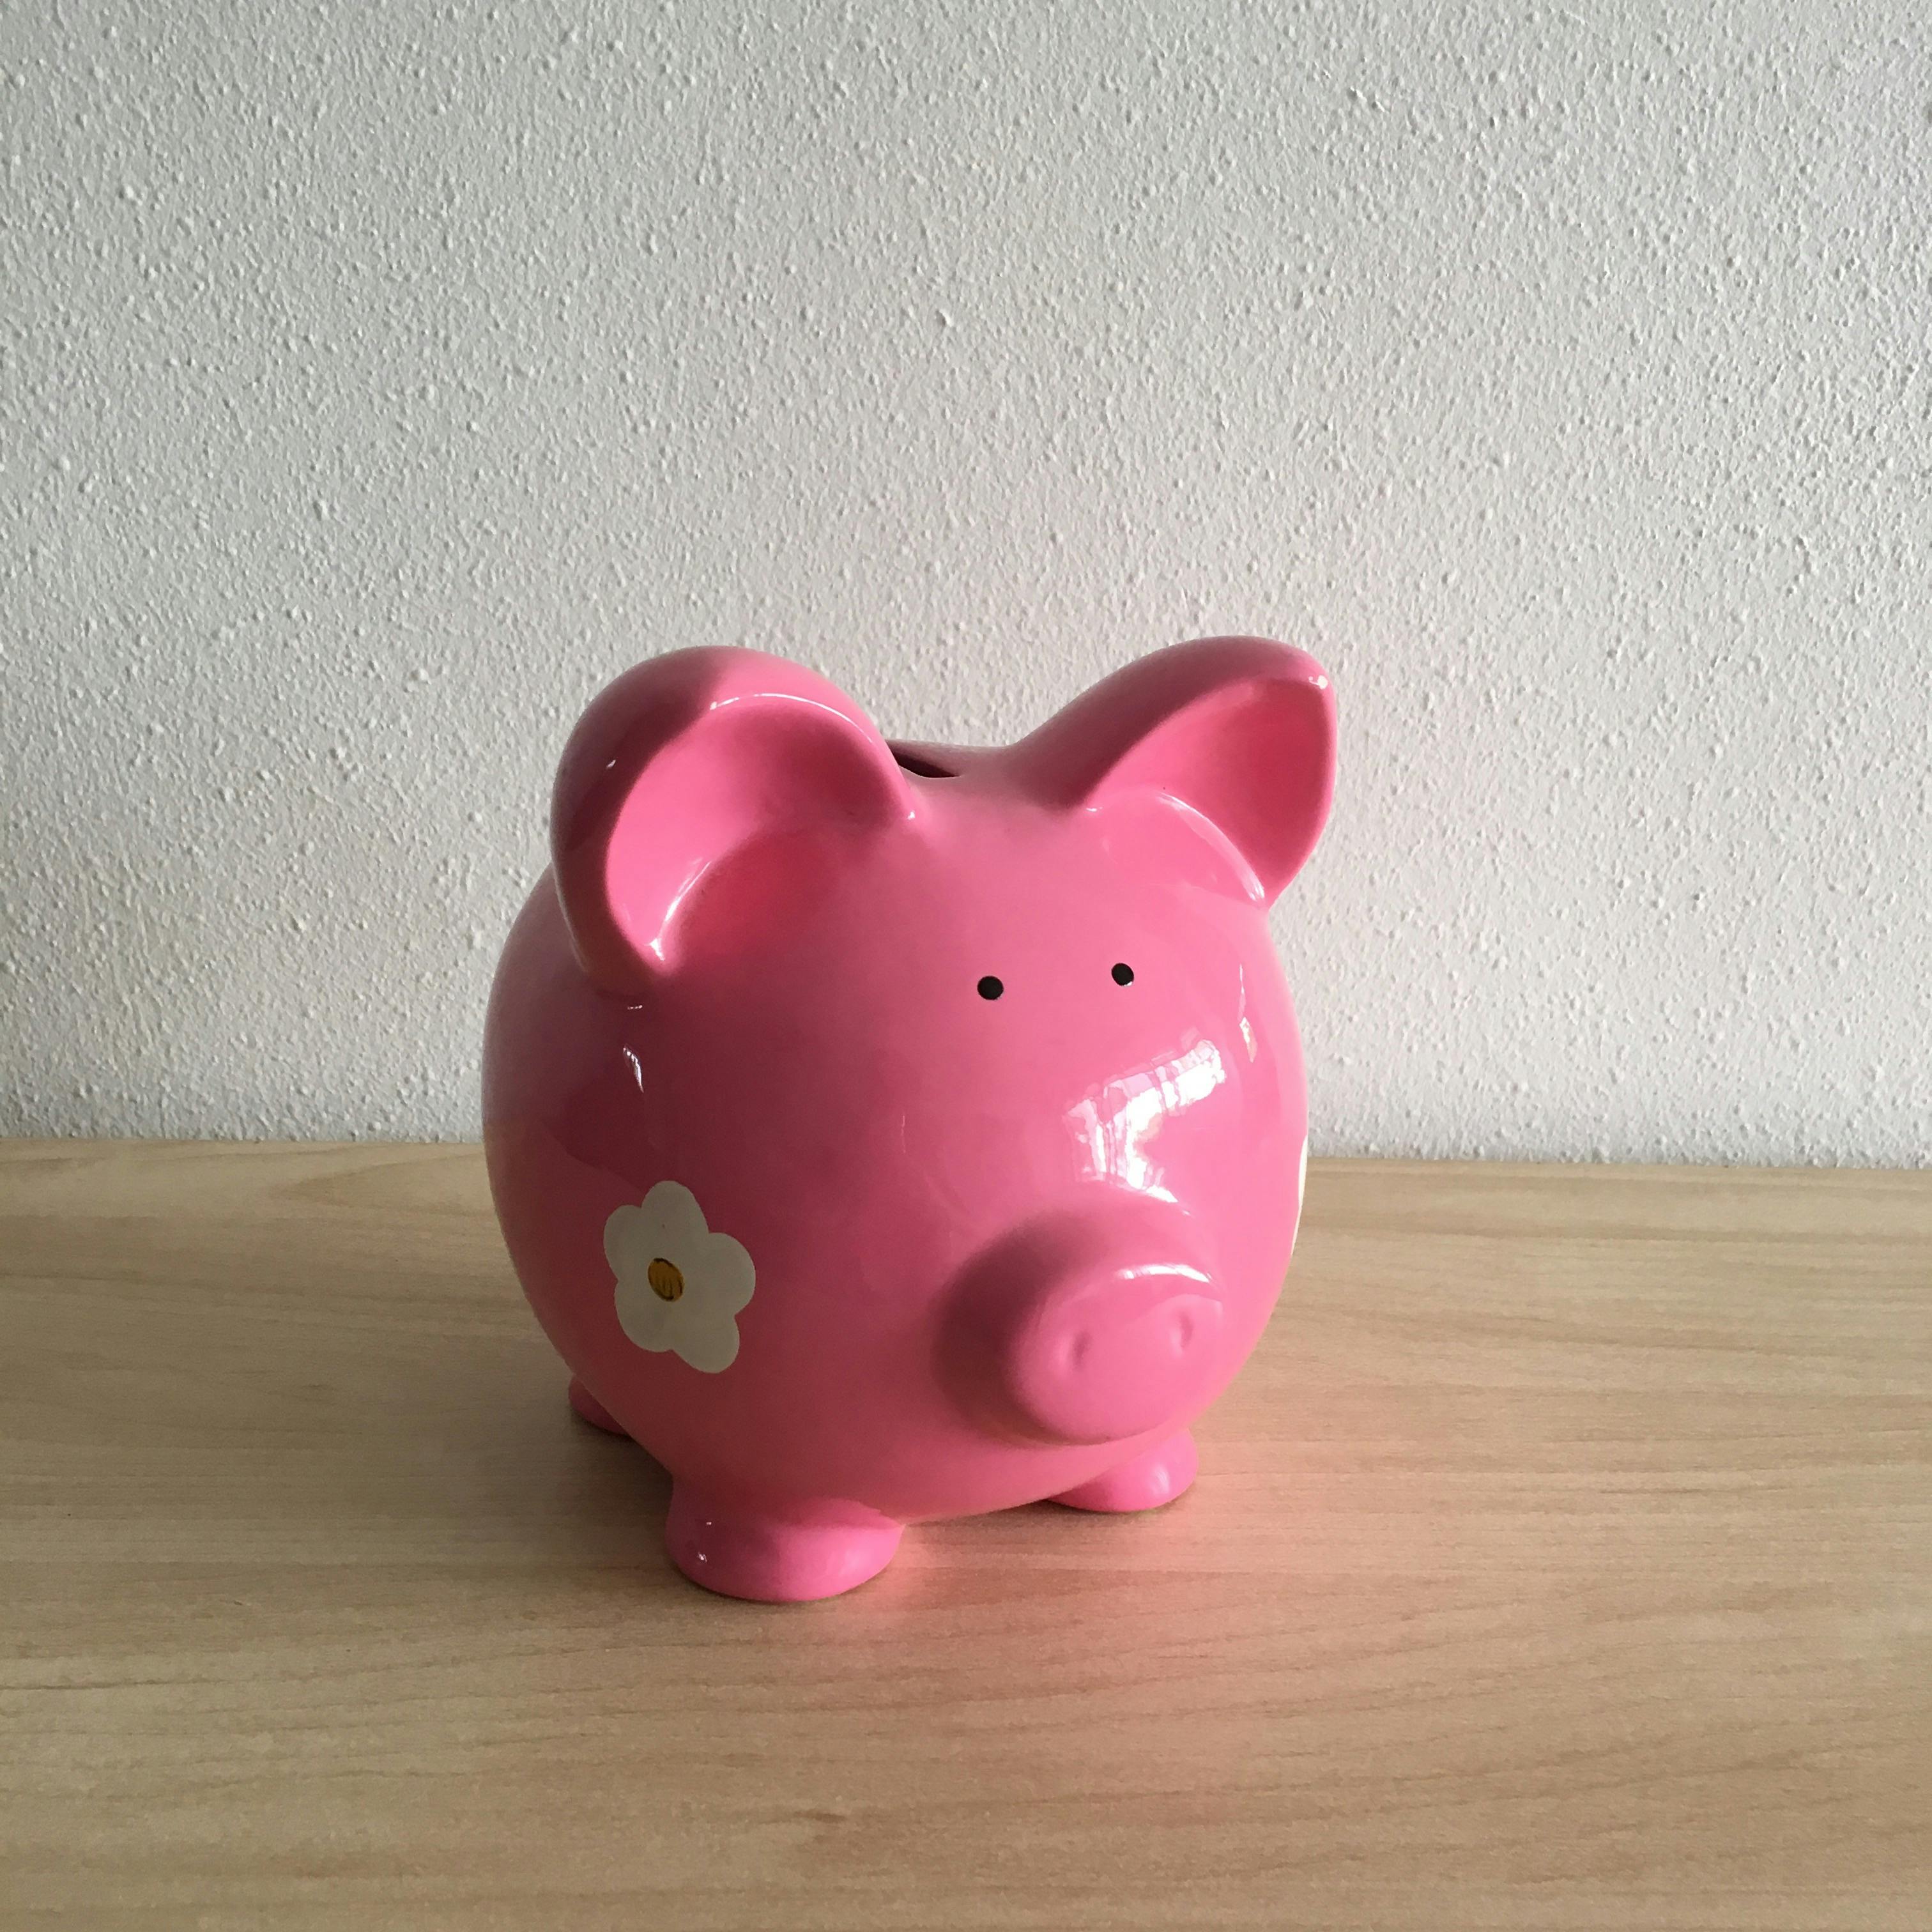 Free stock photo of ceramic, pig, piggy bank